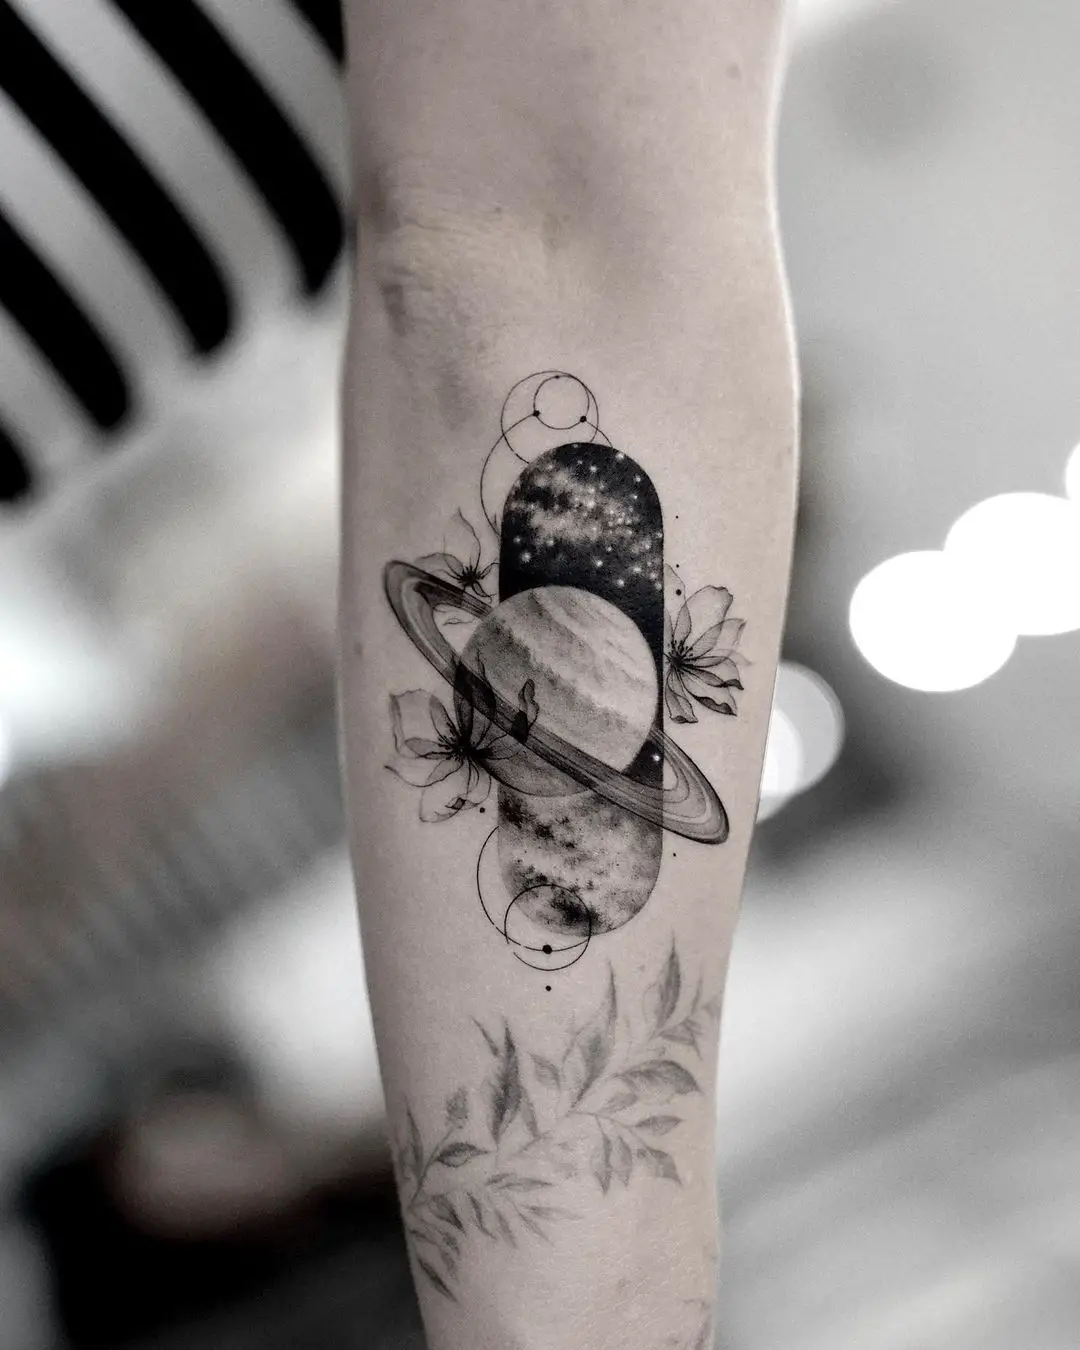 Space tattoo ideas for men by bartektattoo